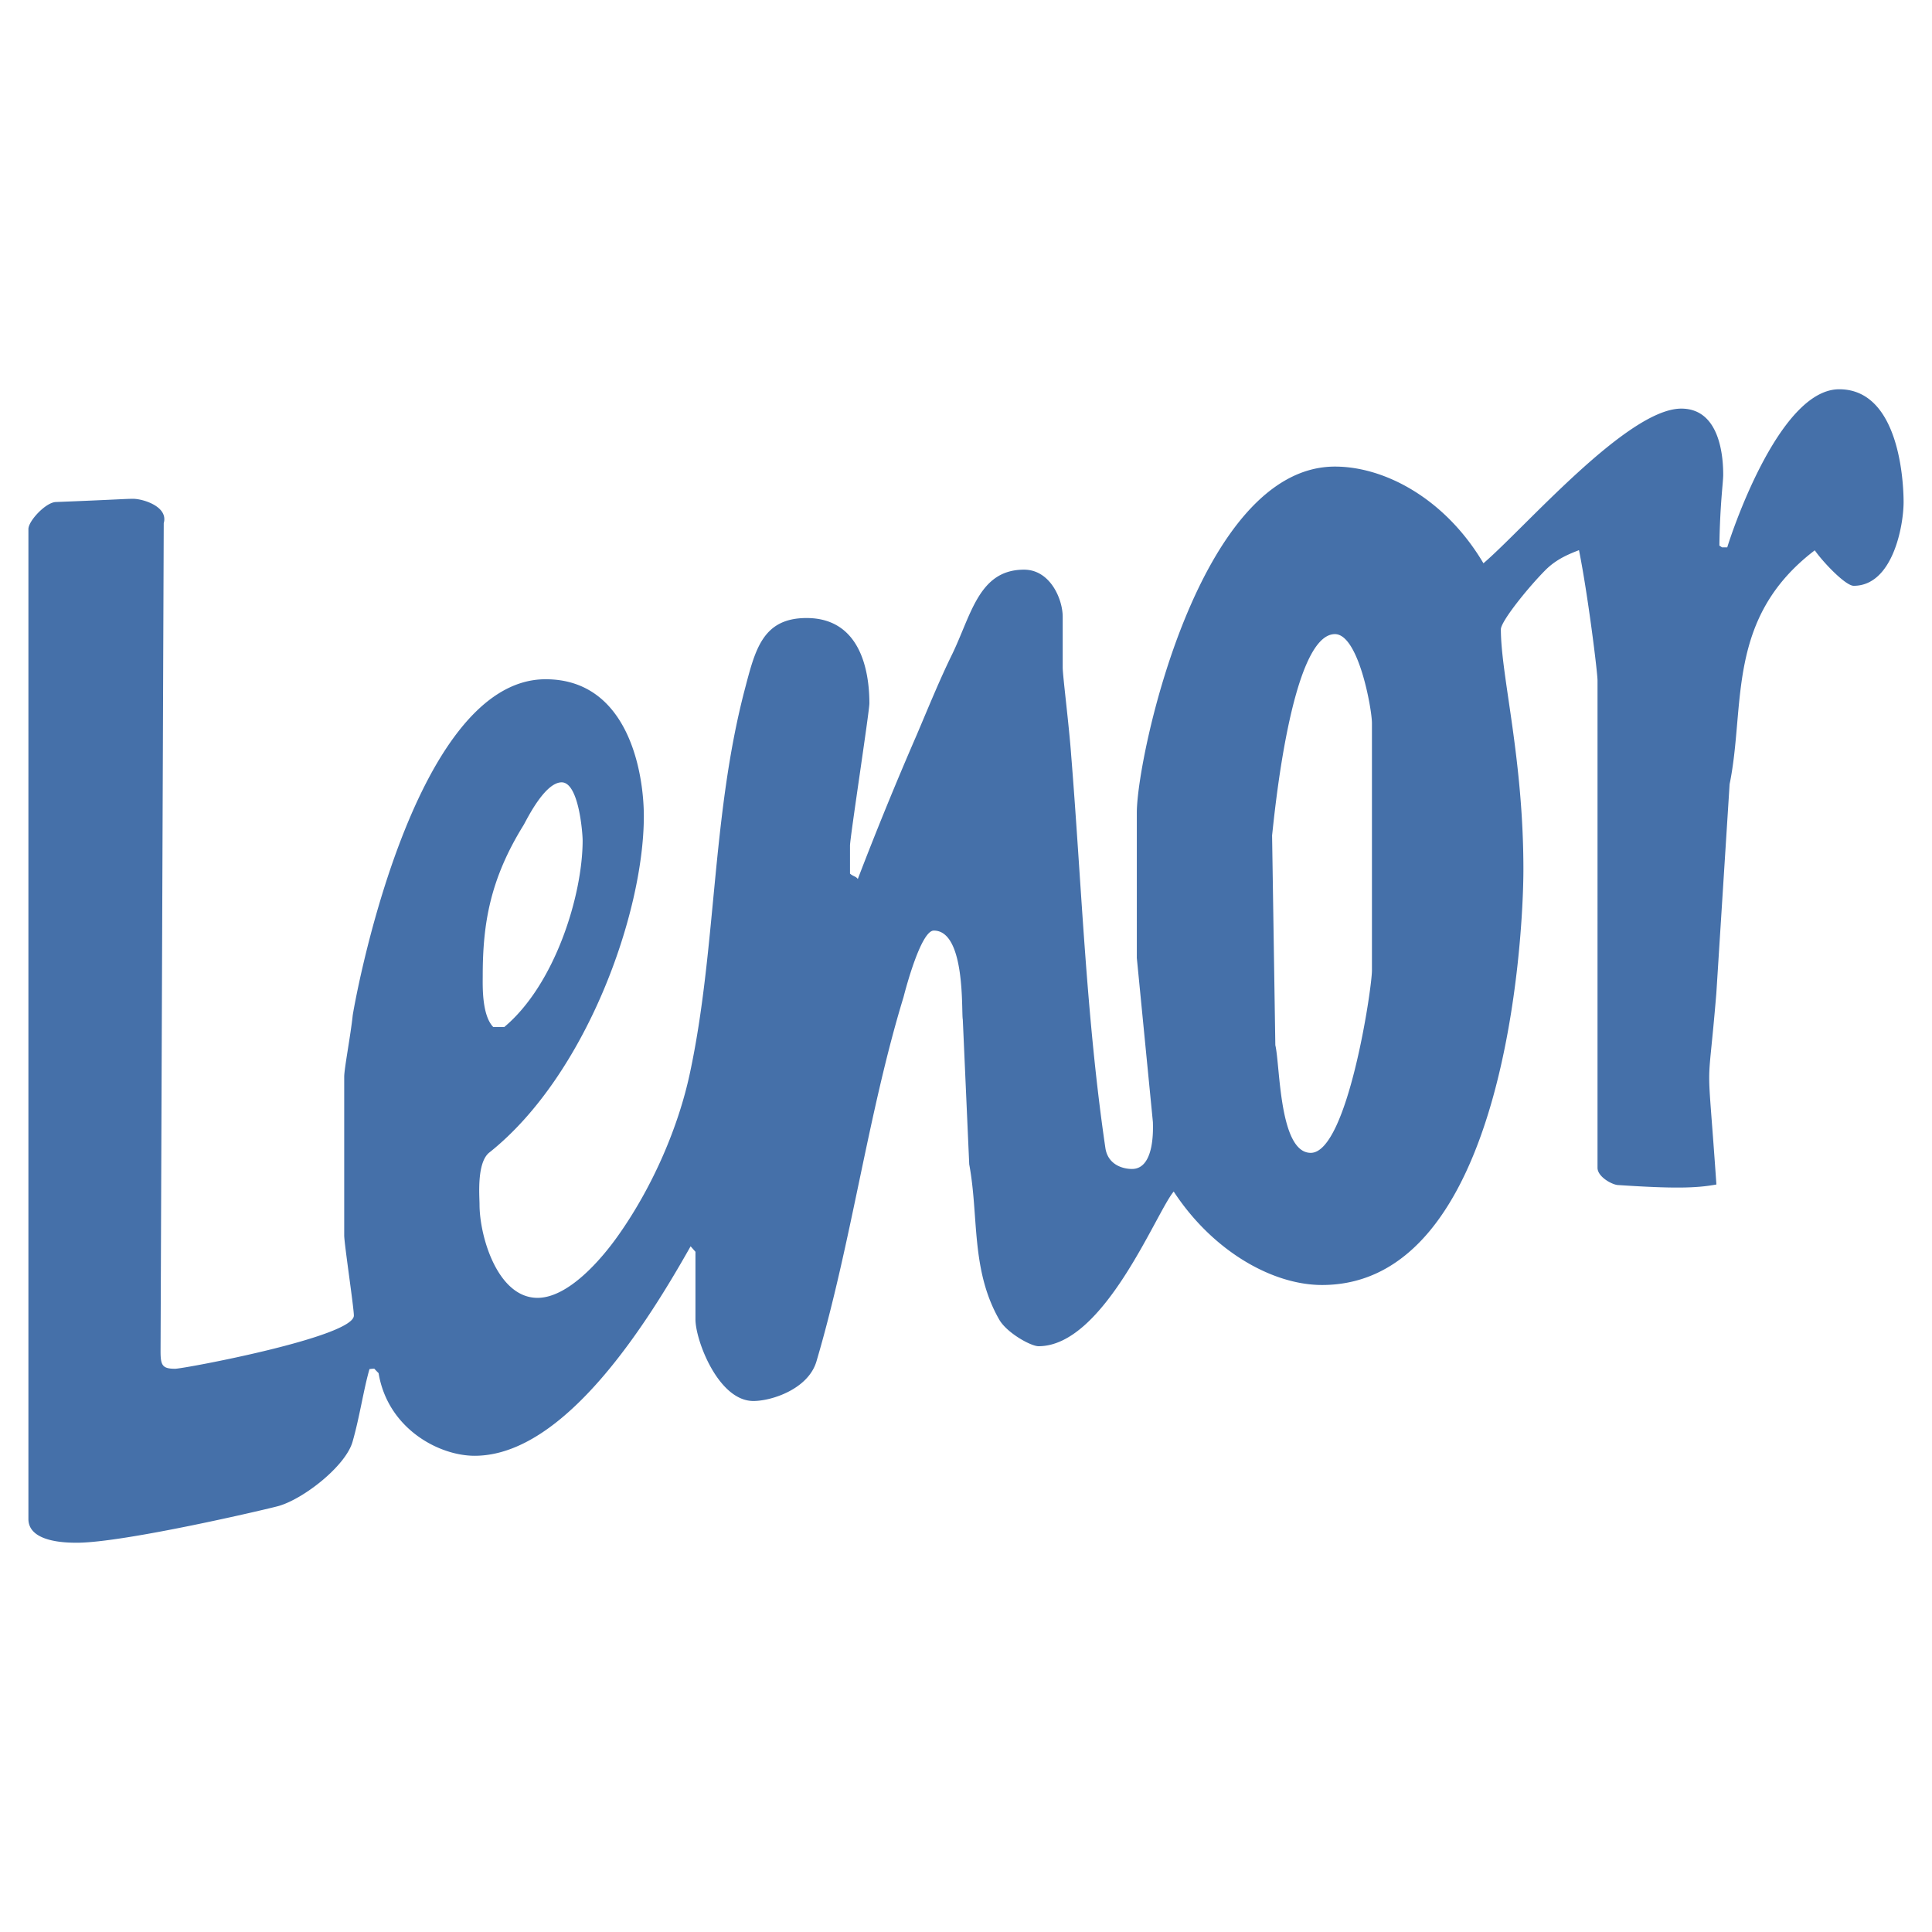 Lennar Blue logo colors